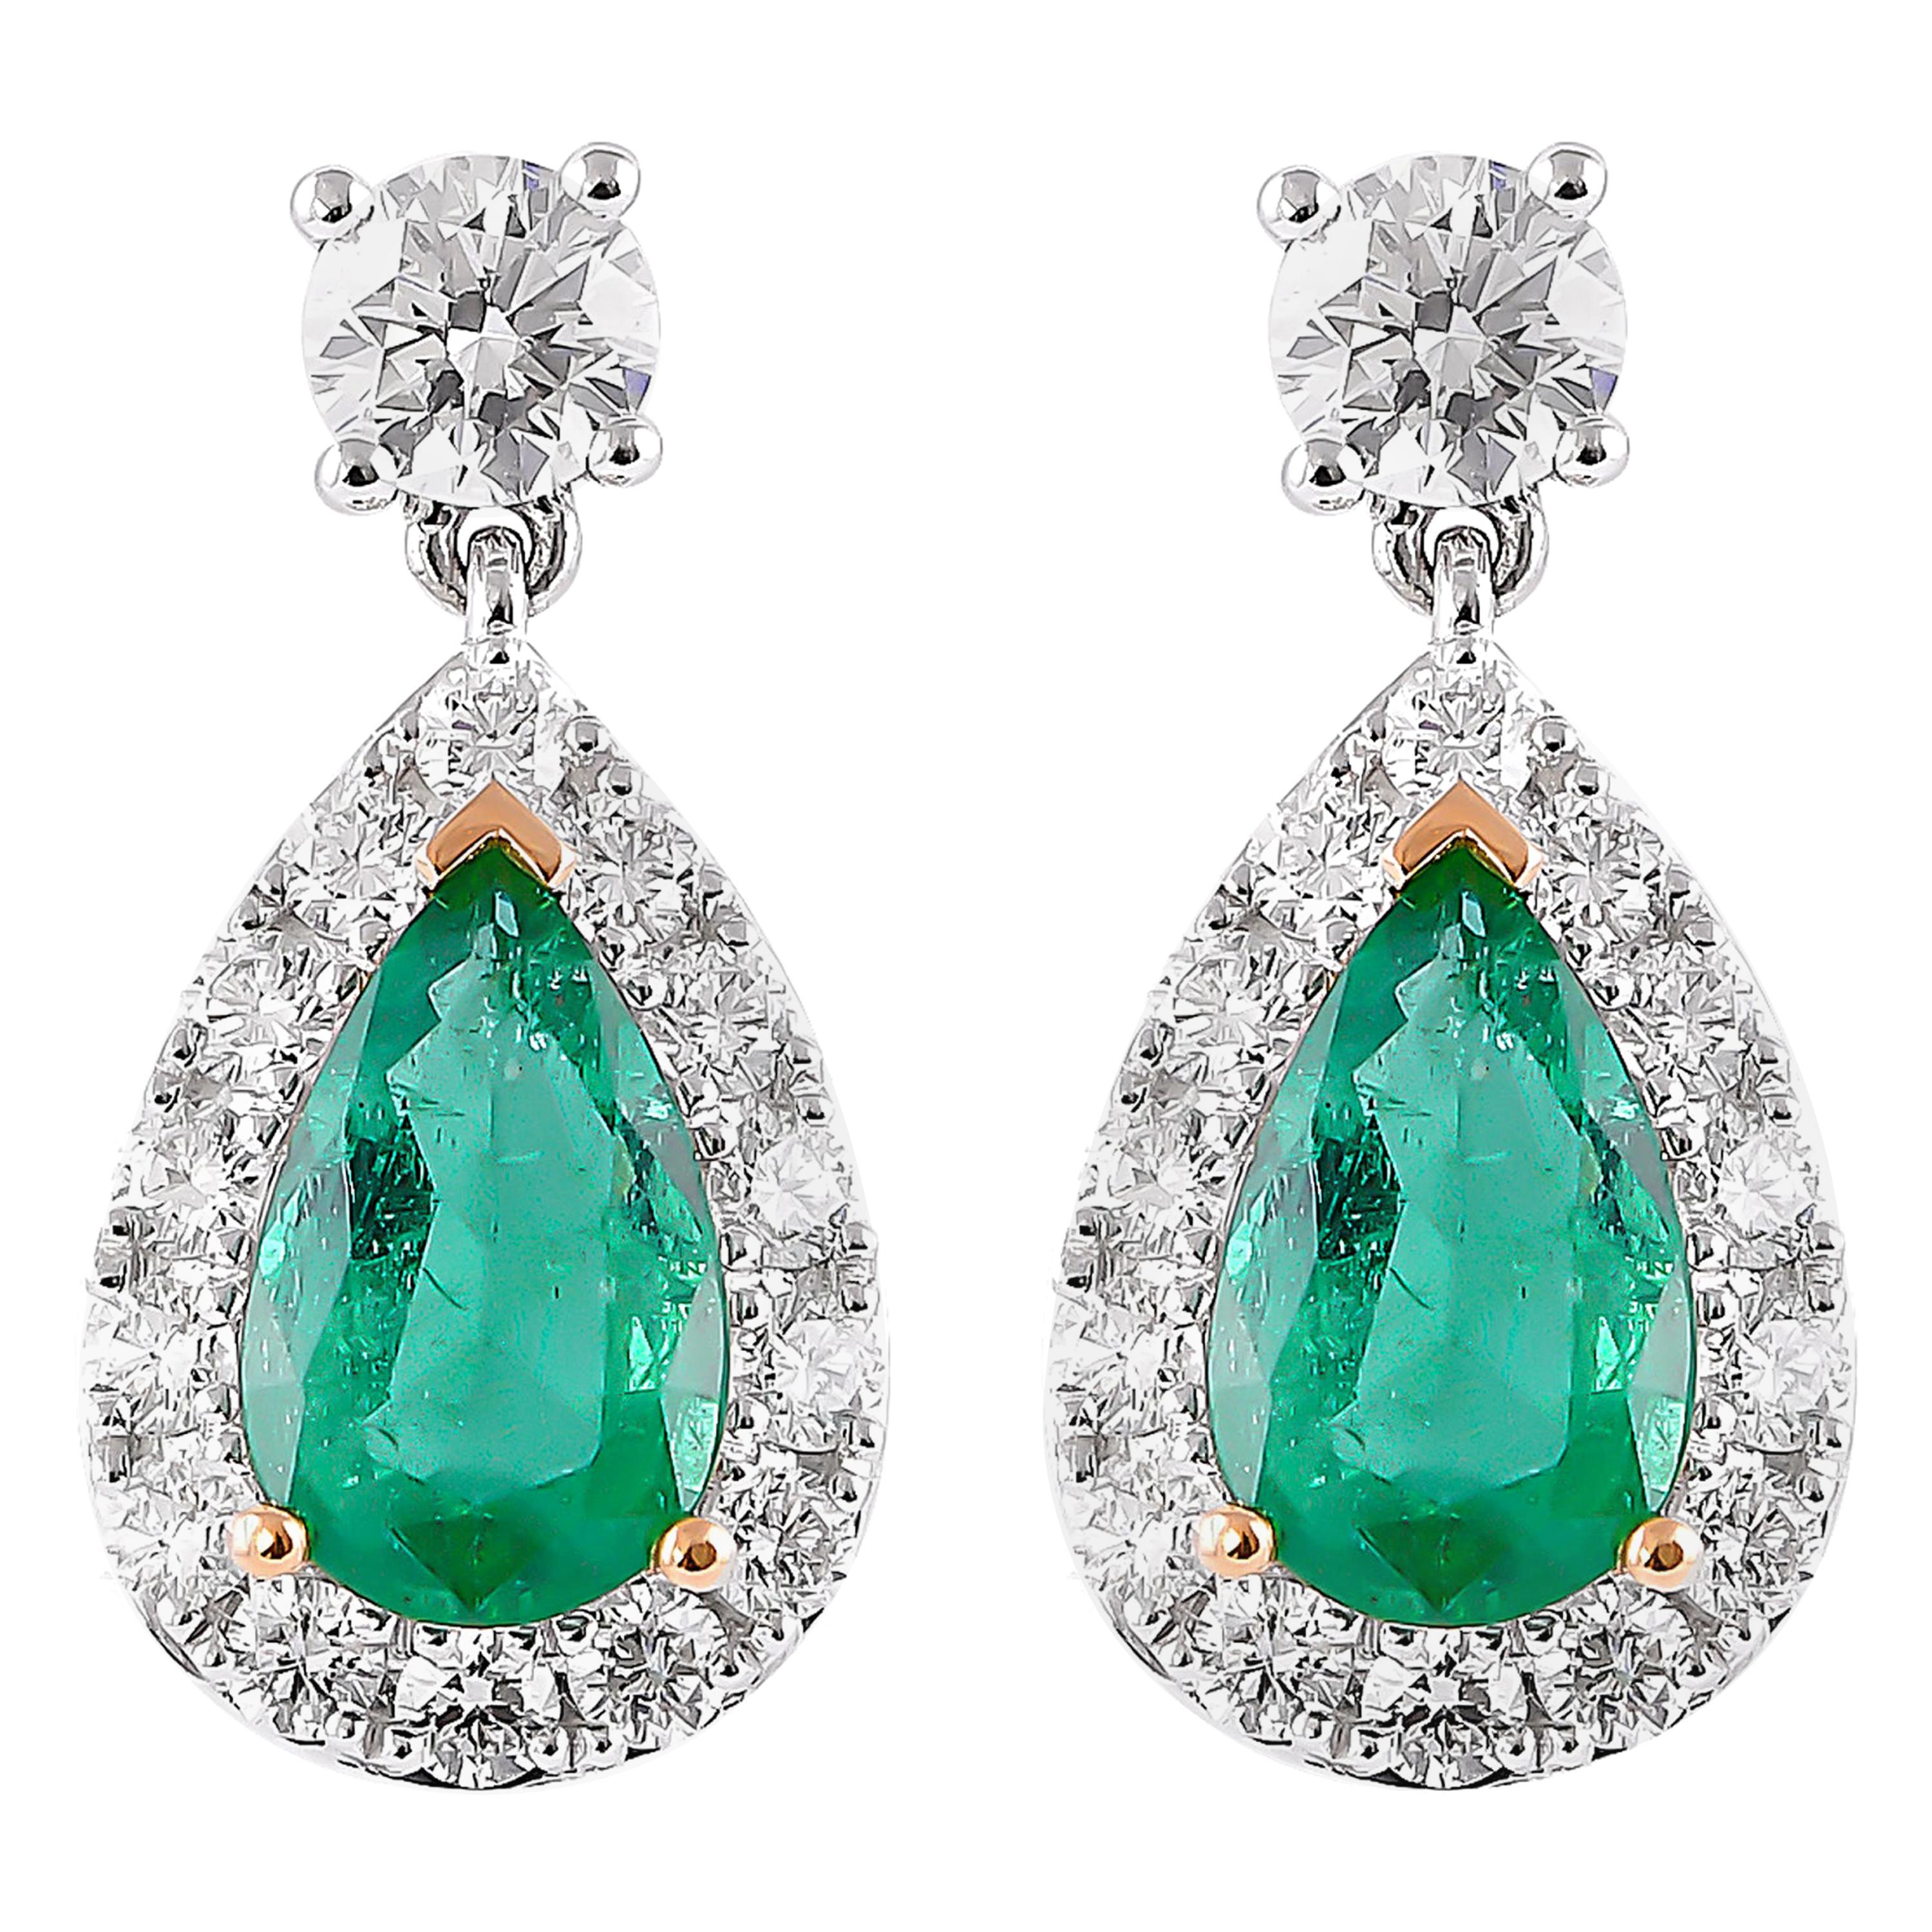 1.9 Carat Emerald and Diamond Earrings in 18 Karat White Gold